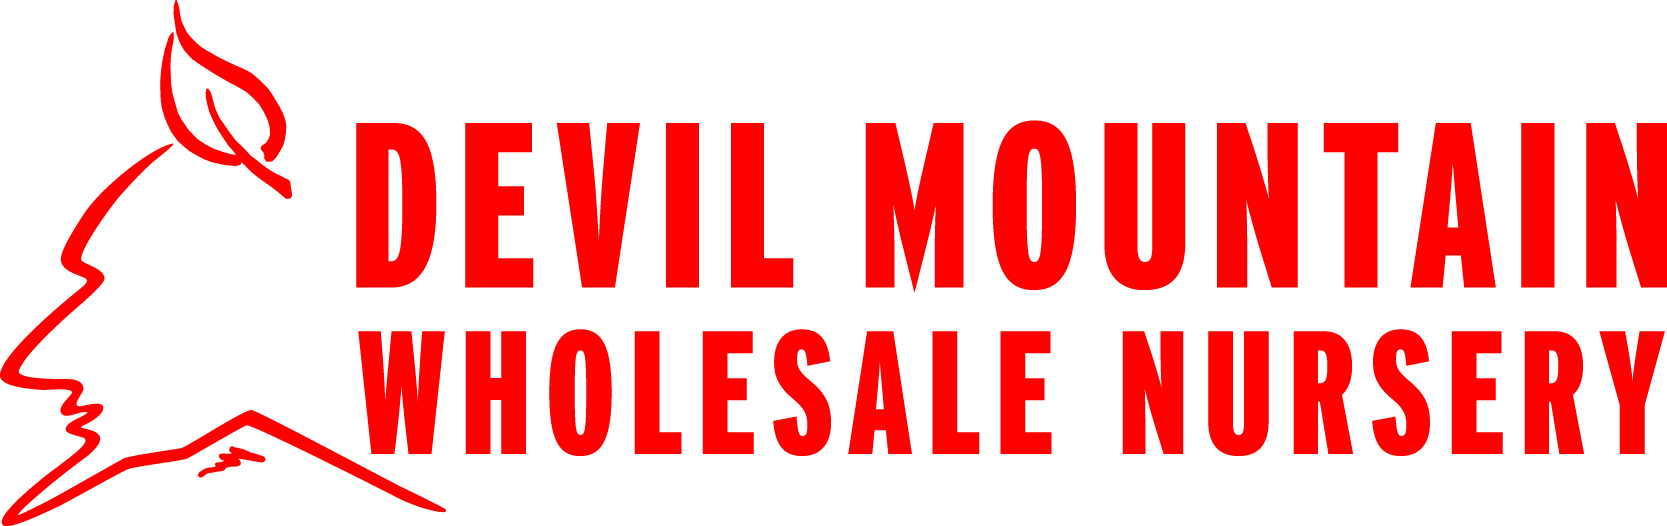 Devil Mountain_Logo_wholesale nursery_09-2017-Red.jpg